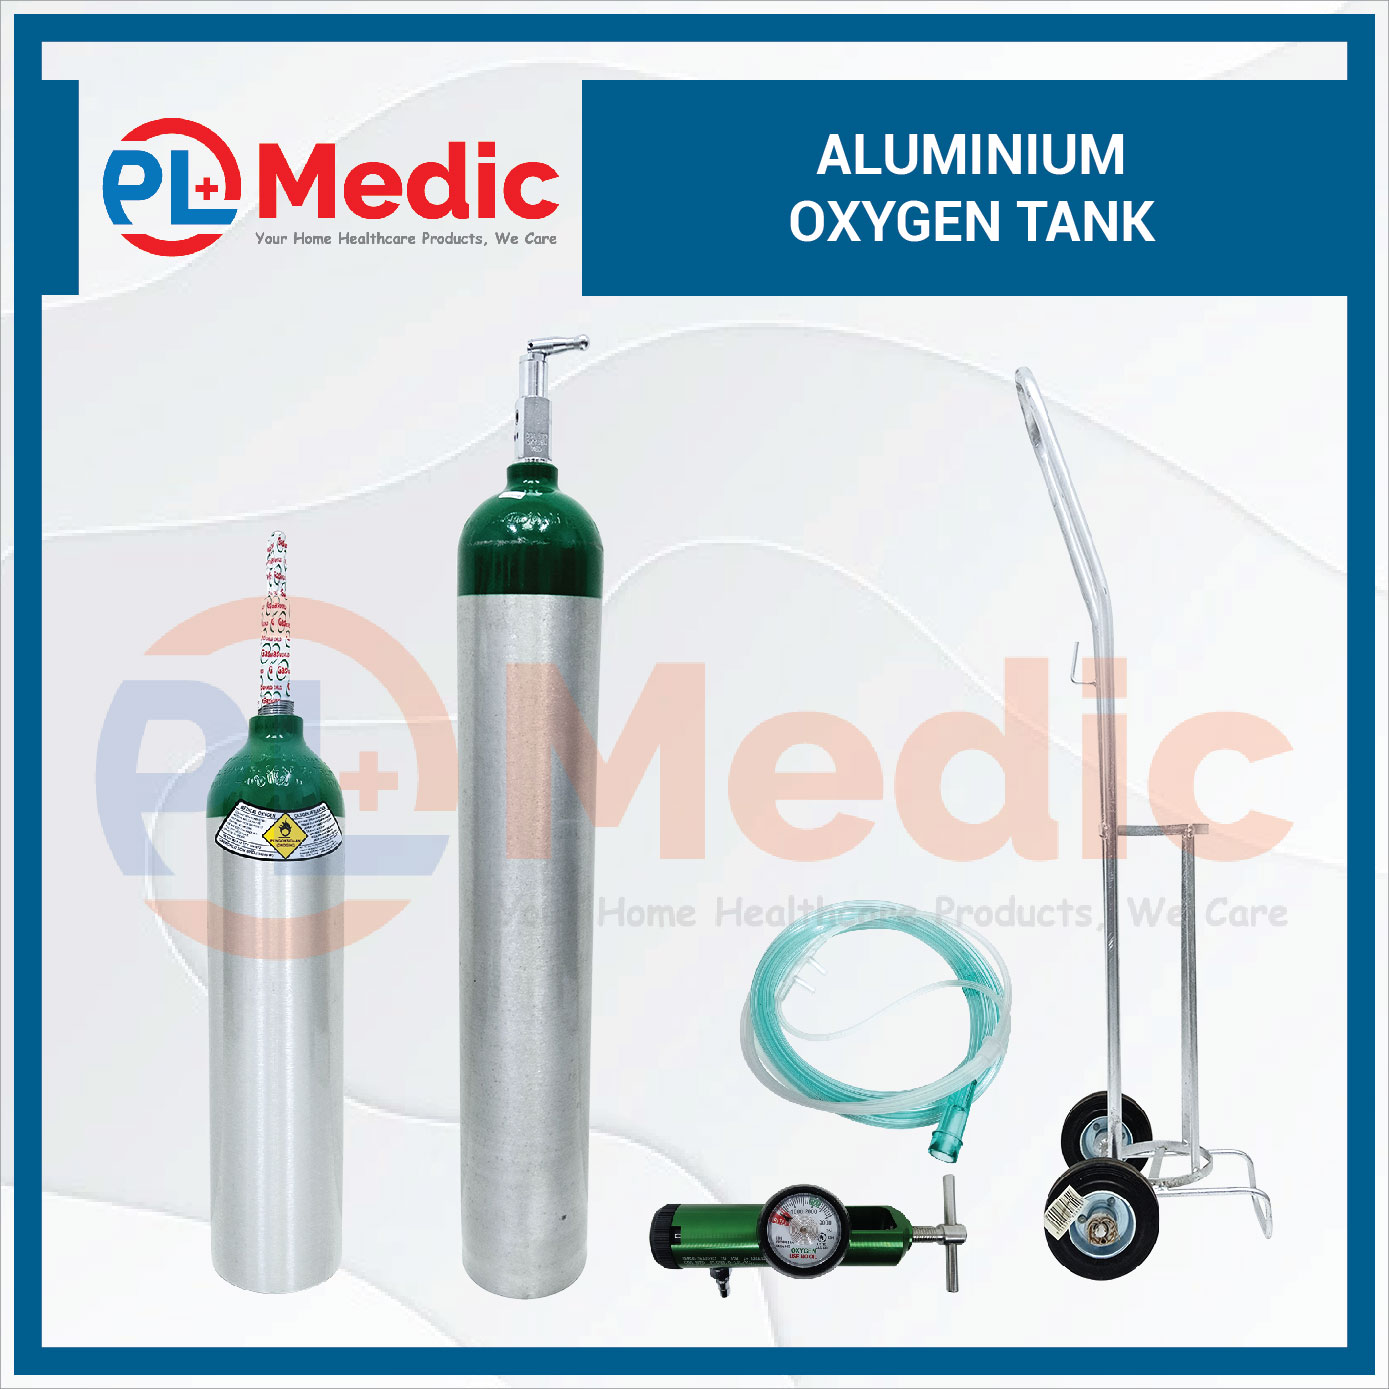 Aluminium Oxygen Cylinder PL Science Medic